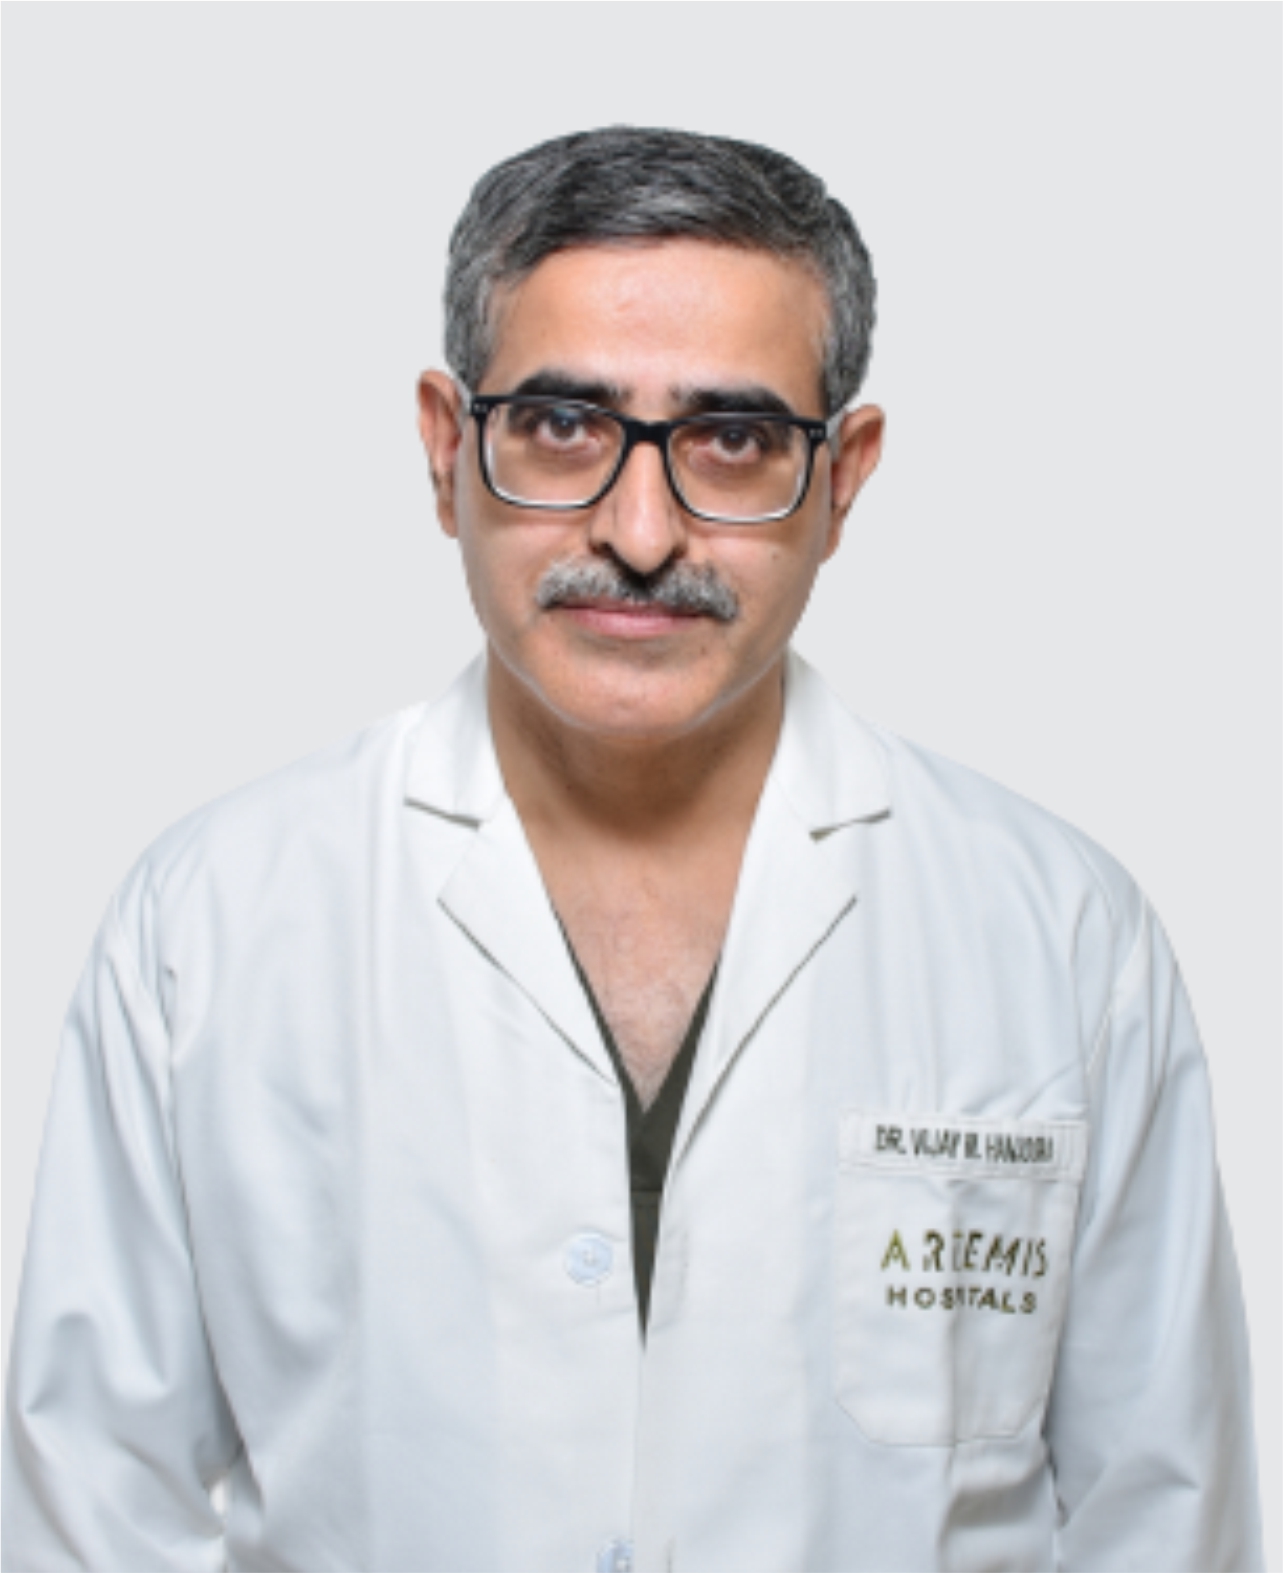 Dr. Vijay Mohan Hanjoora